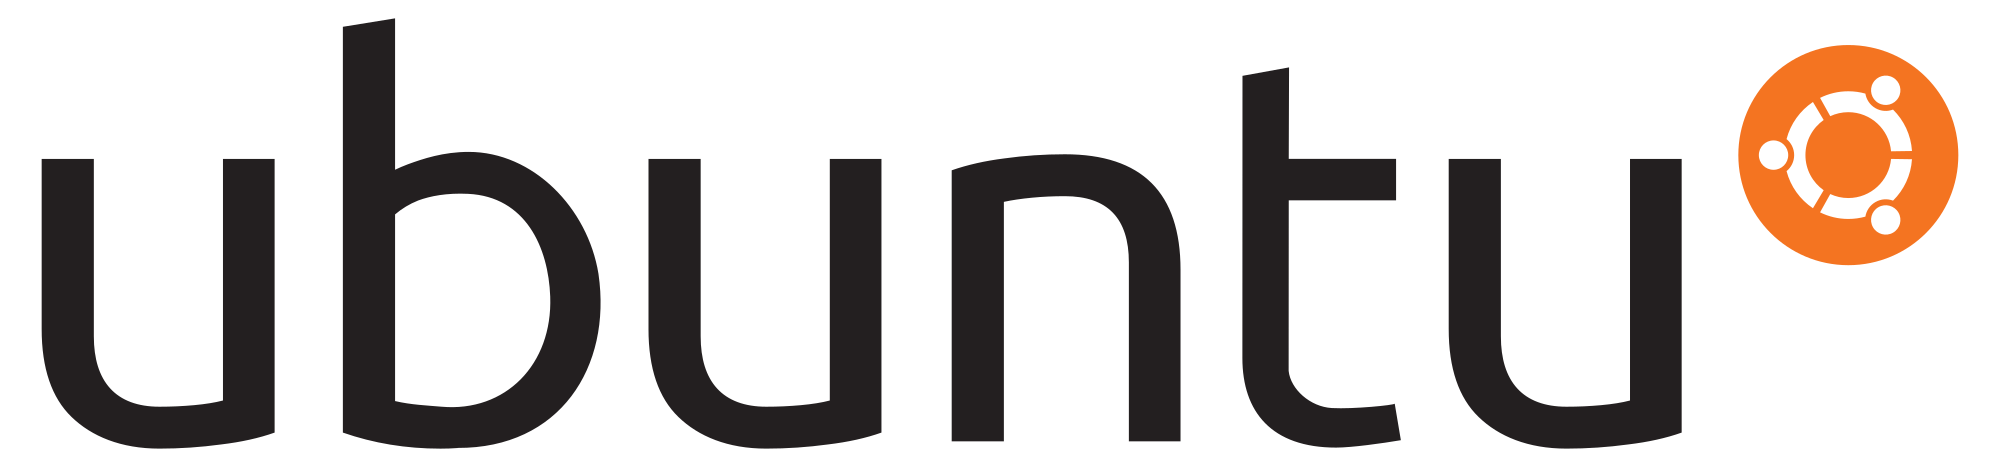 Official Ubuntu logo. Copyright Canonical Ltd.